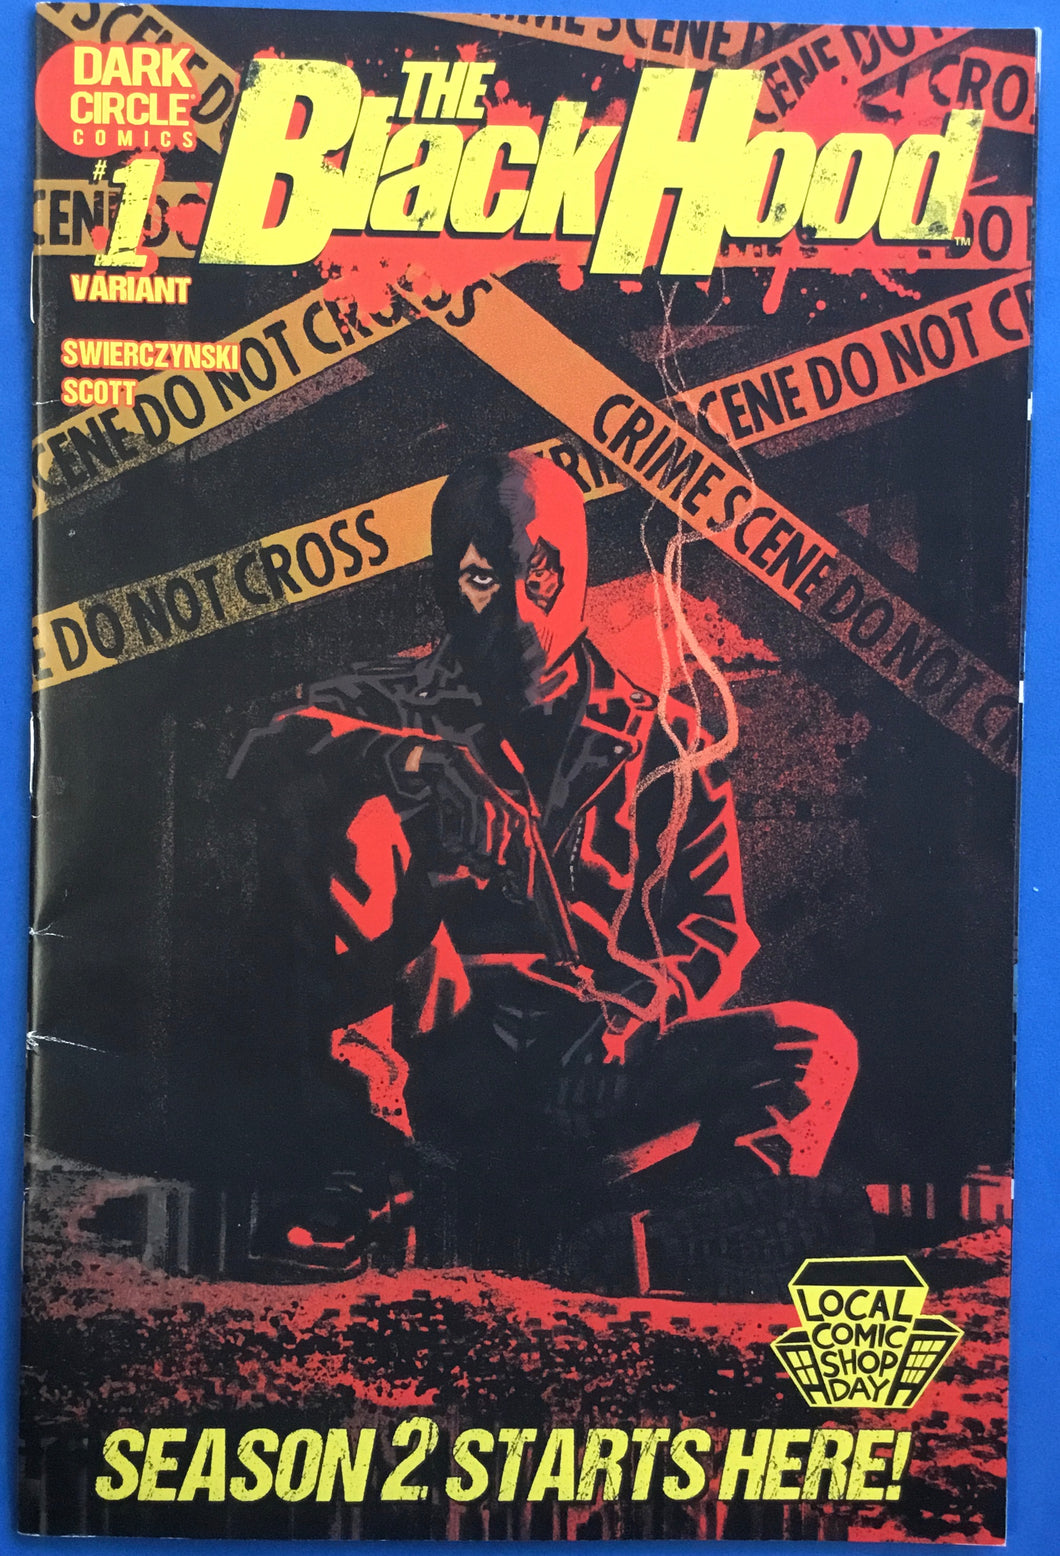 The Black Hood No. #1 2016 Dark Circle Comics